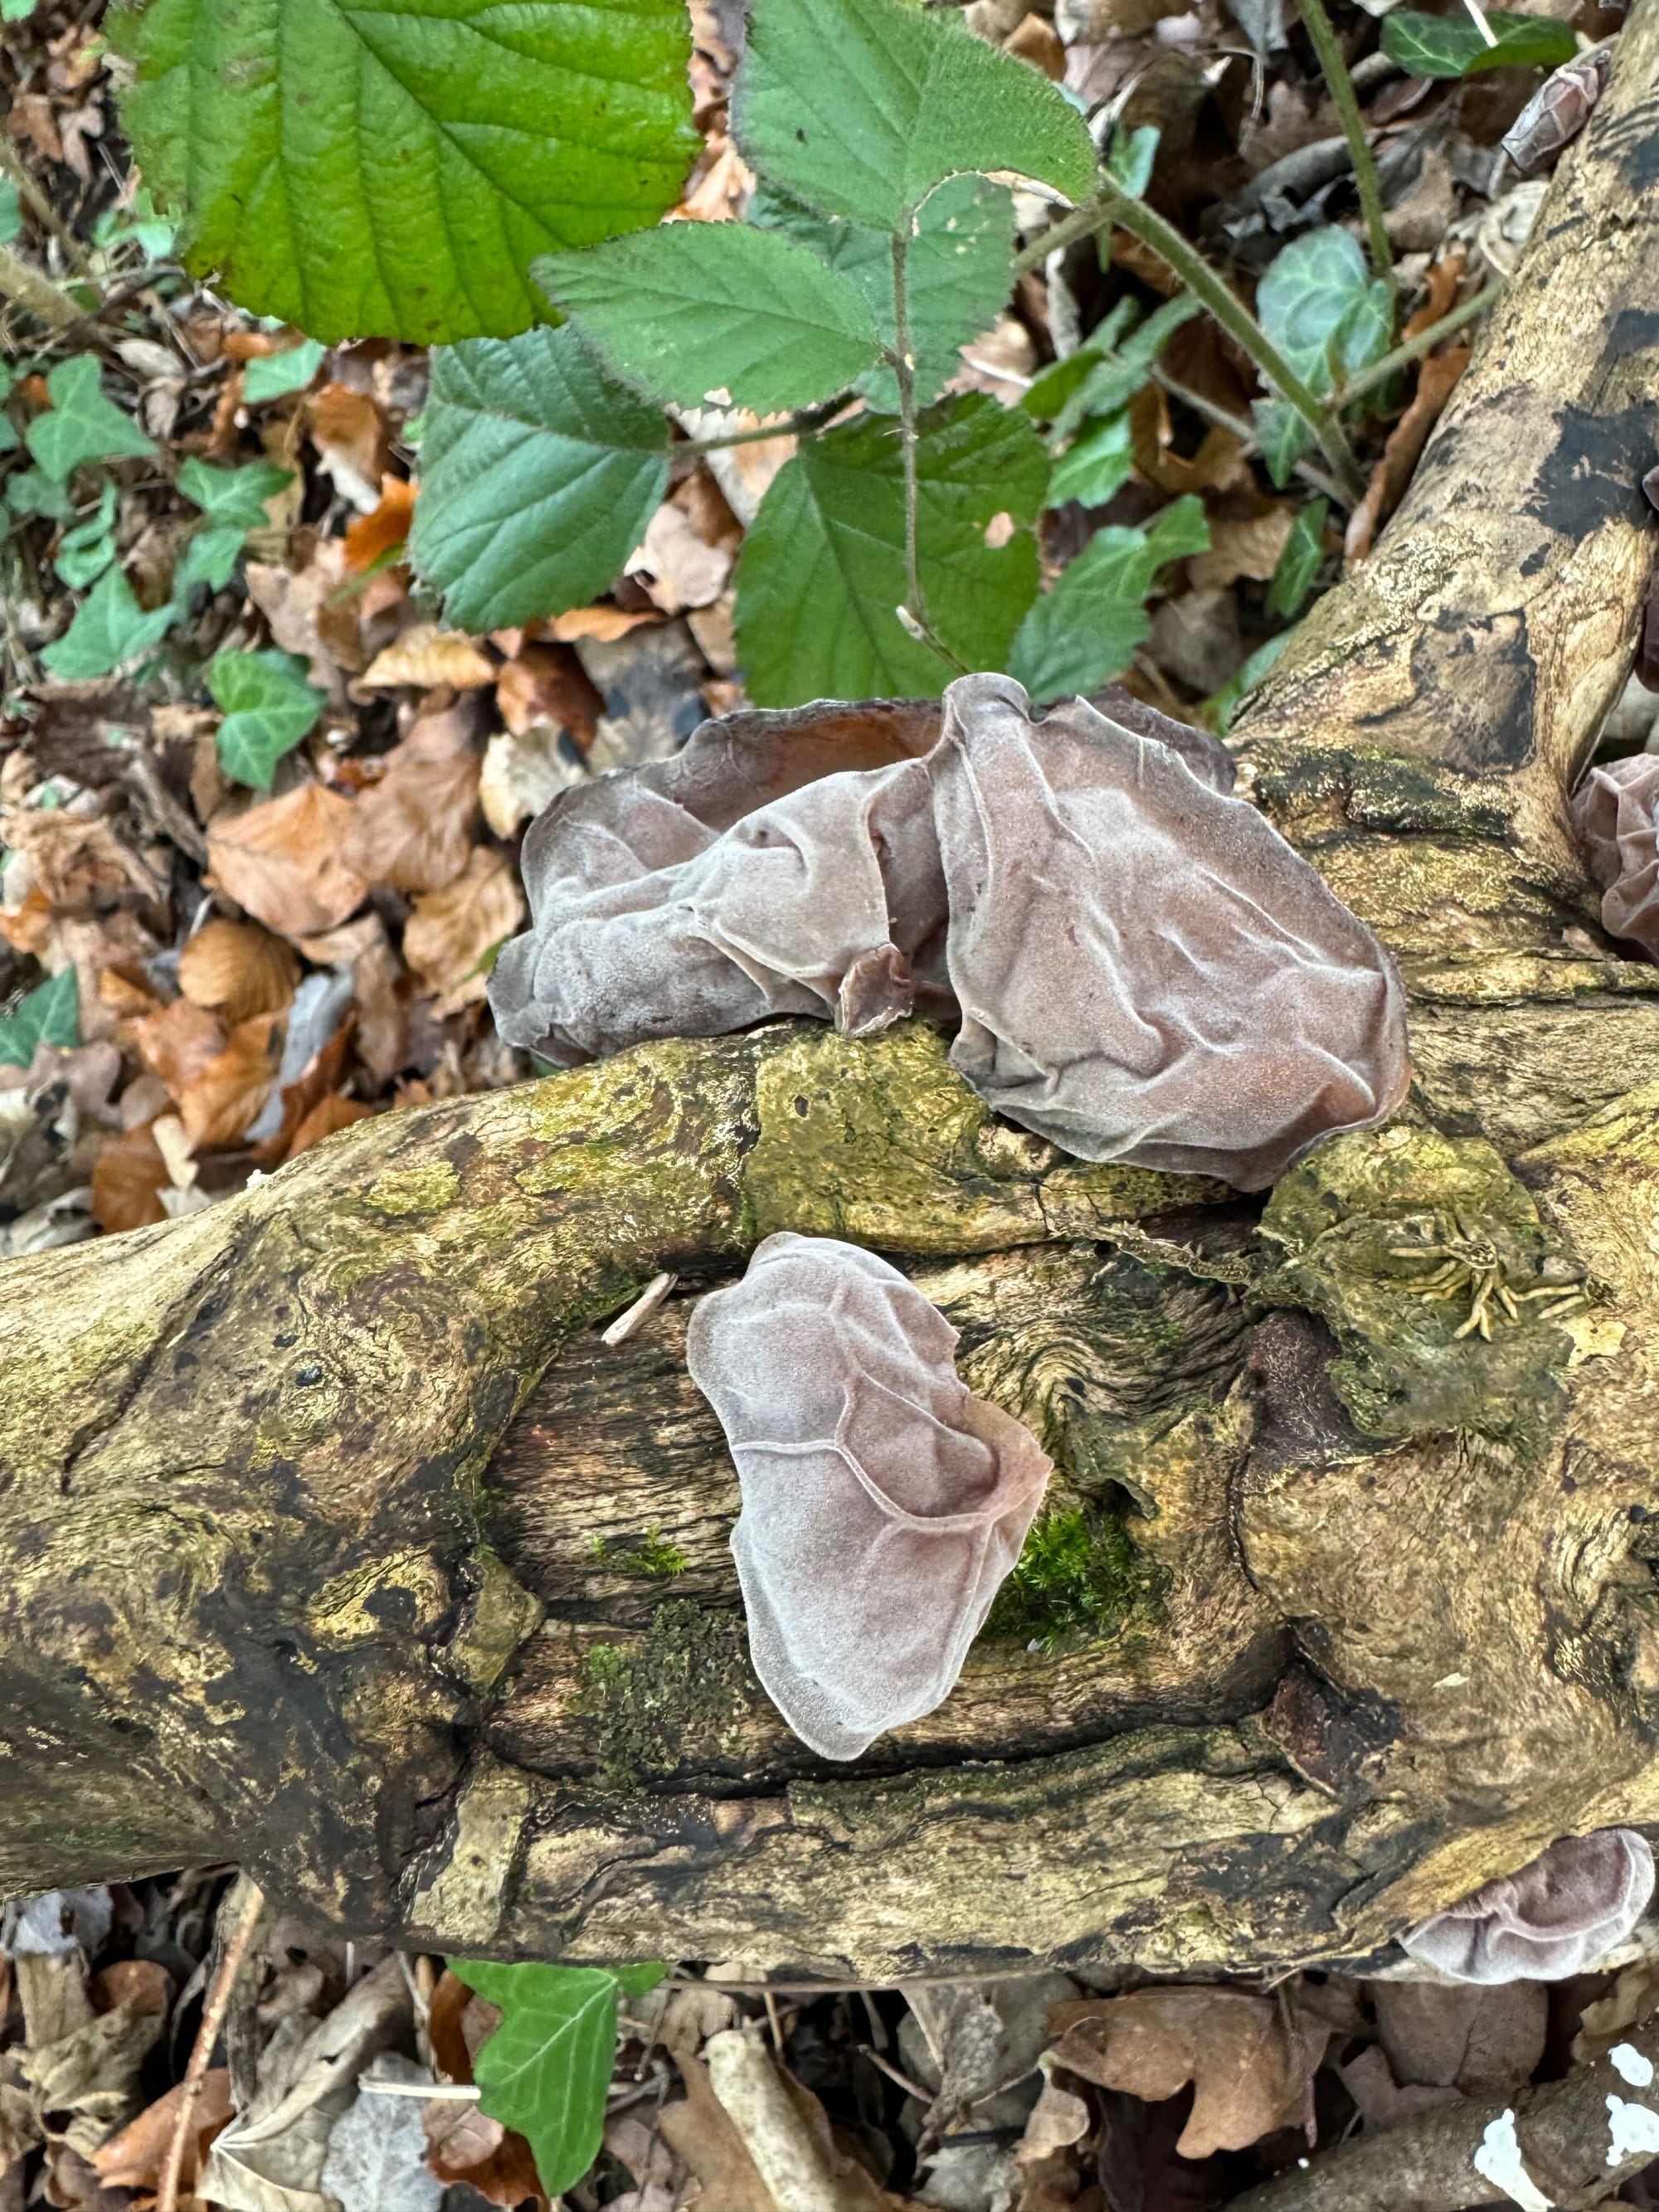 Brownish grey mushroom growing on a dead log. The mushrooms are shaped like ears.